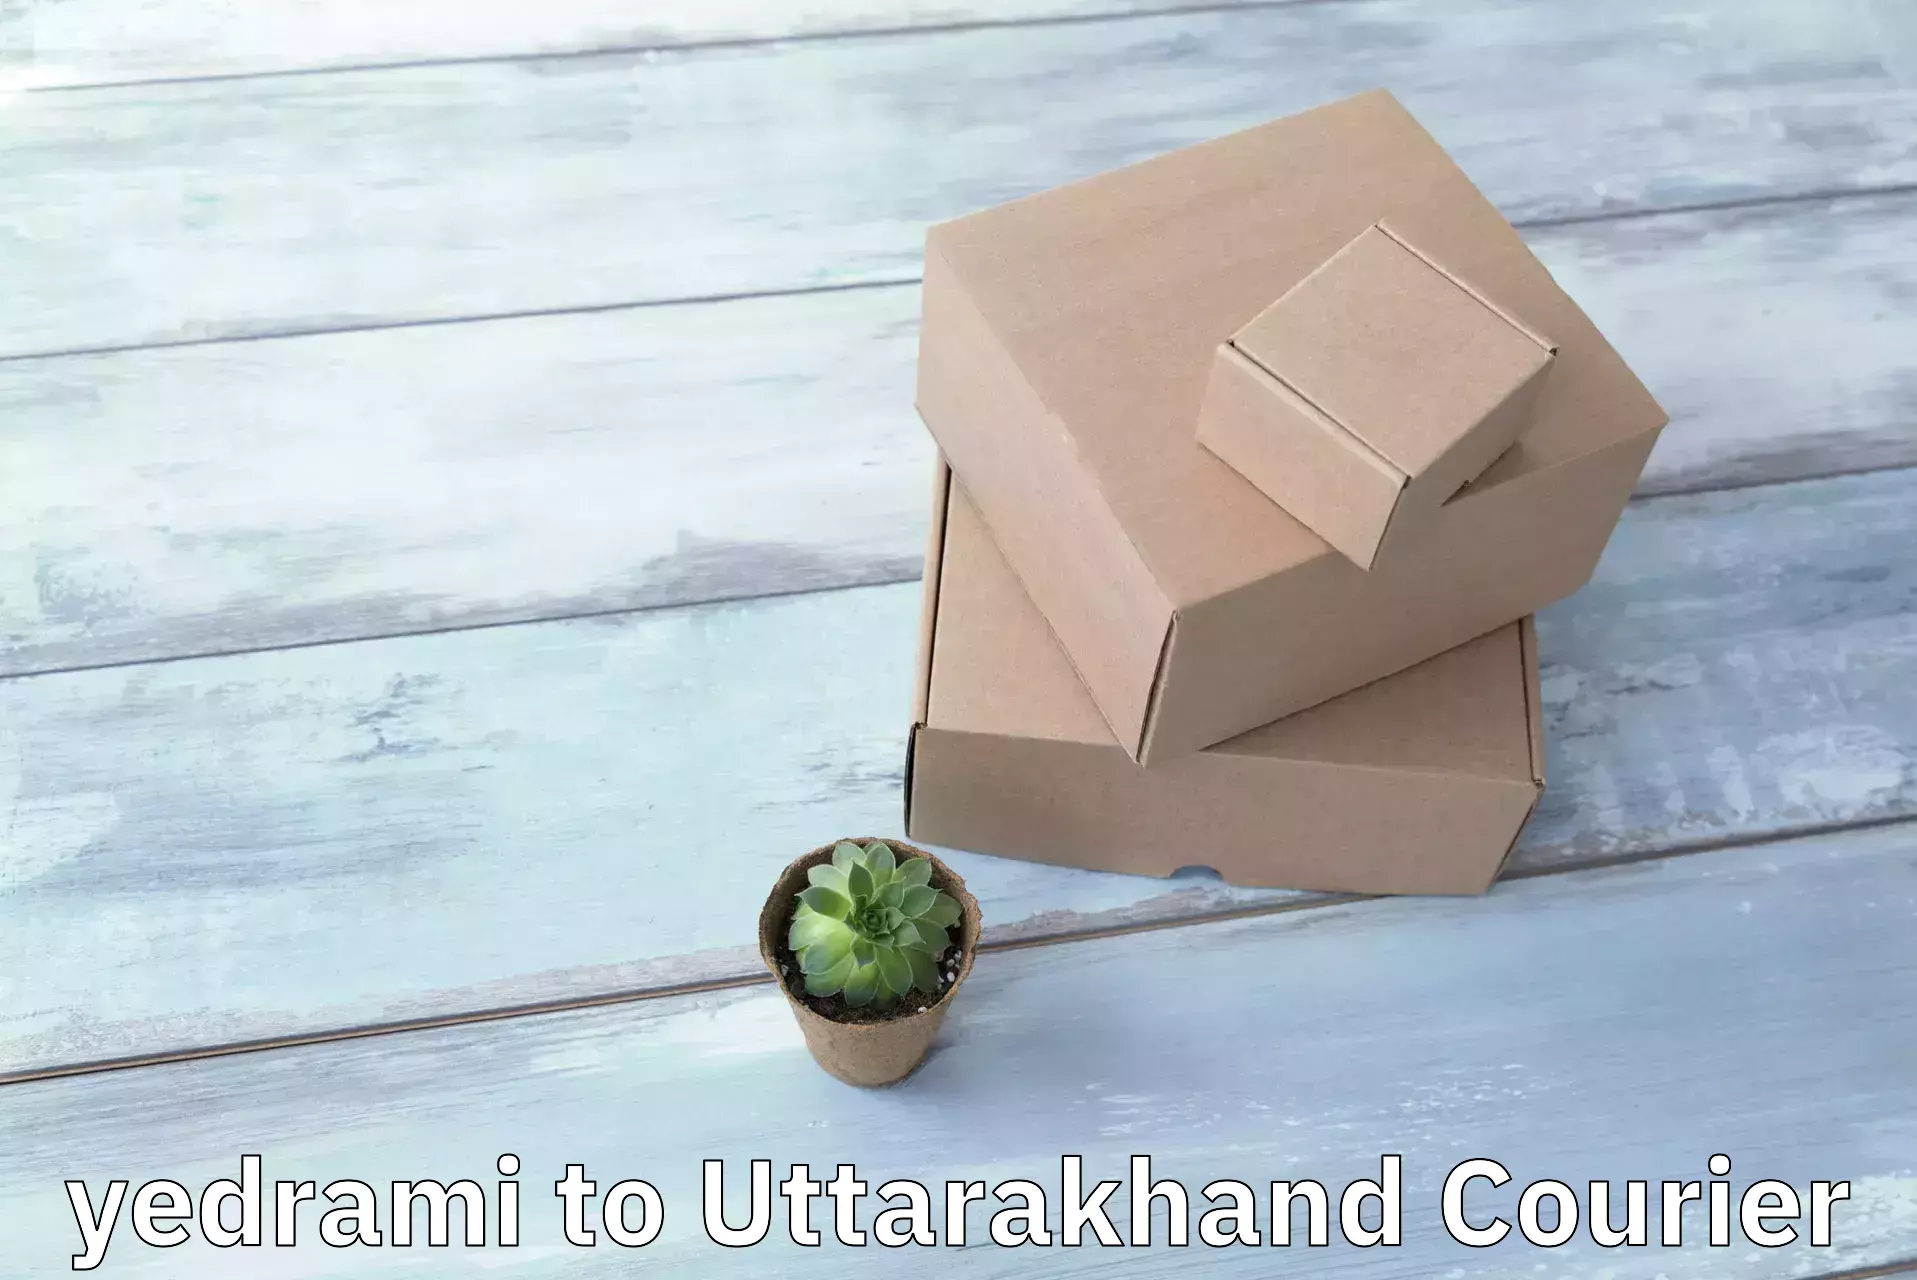 On-call courier service yedrami to Uttarakhand